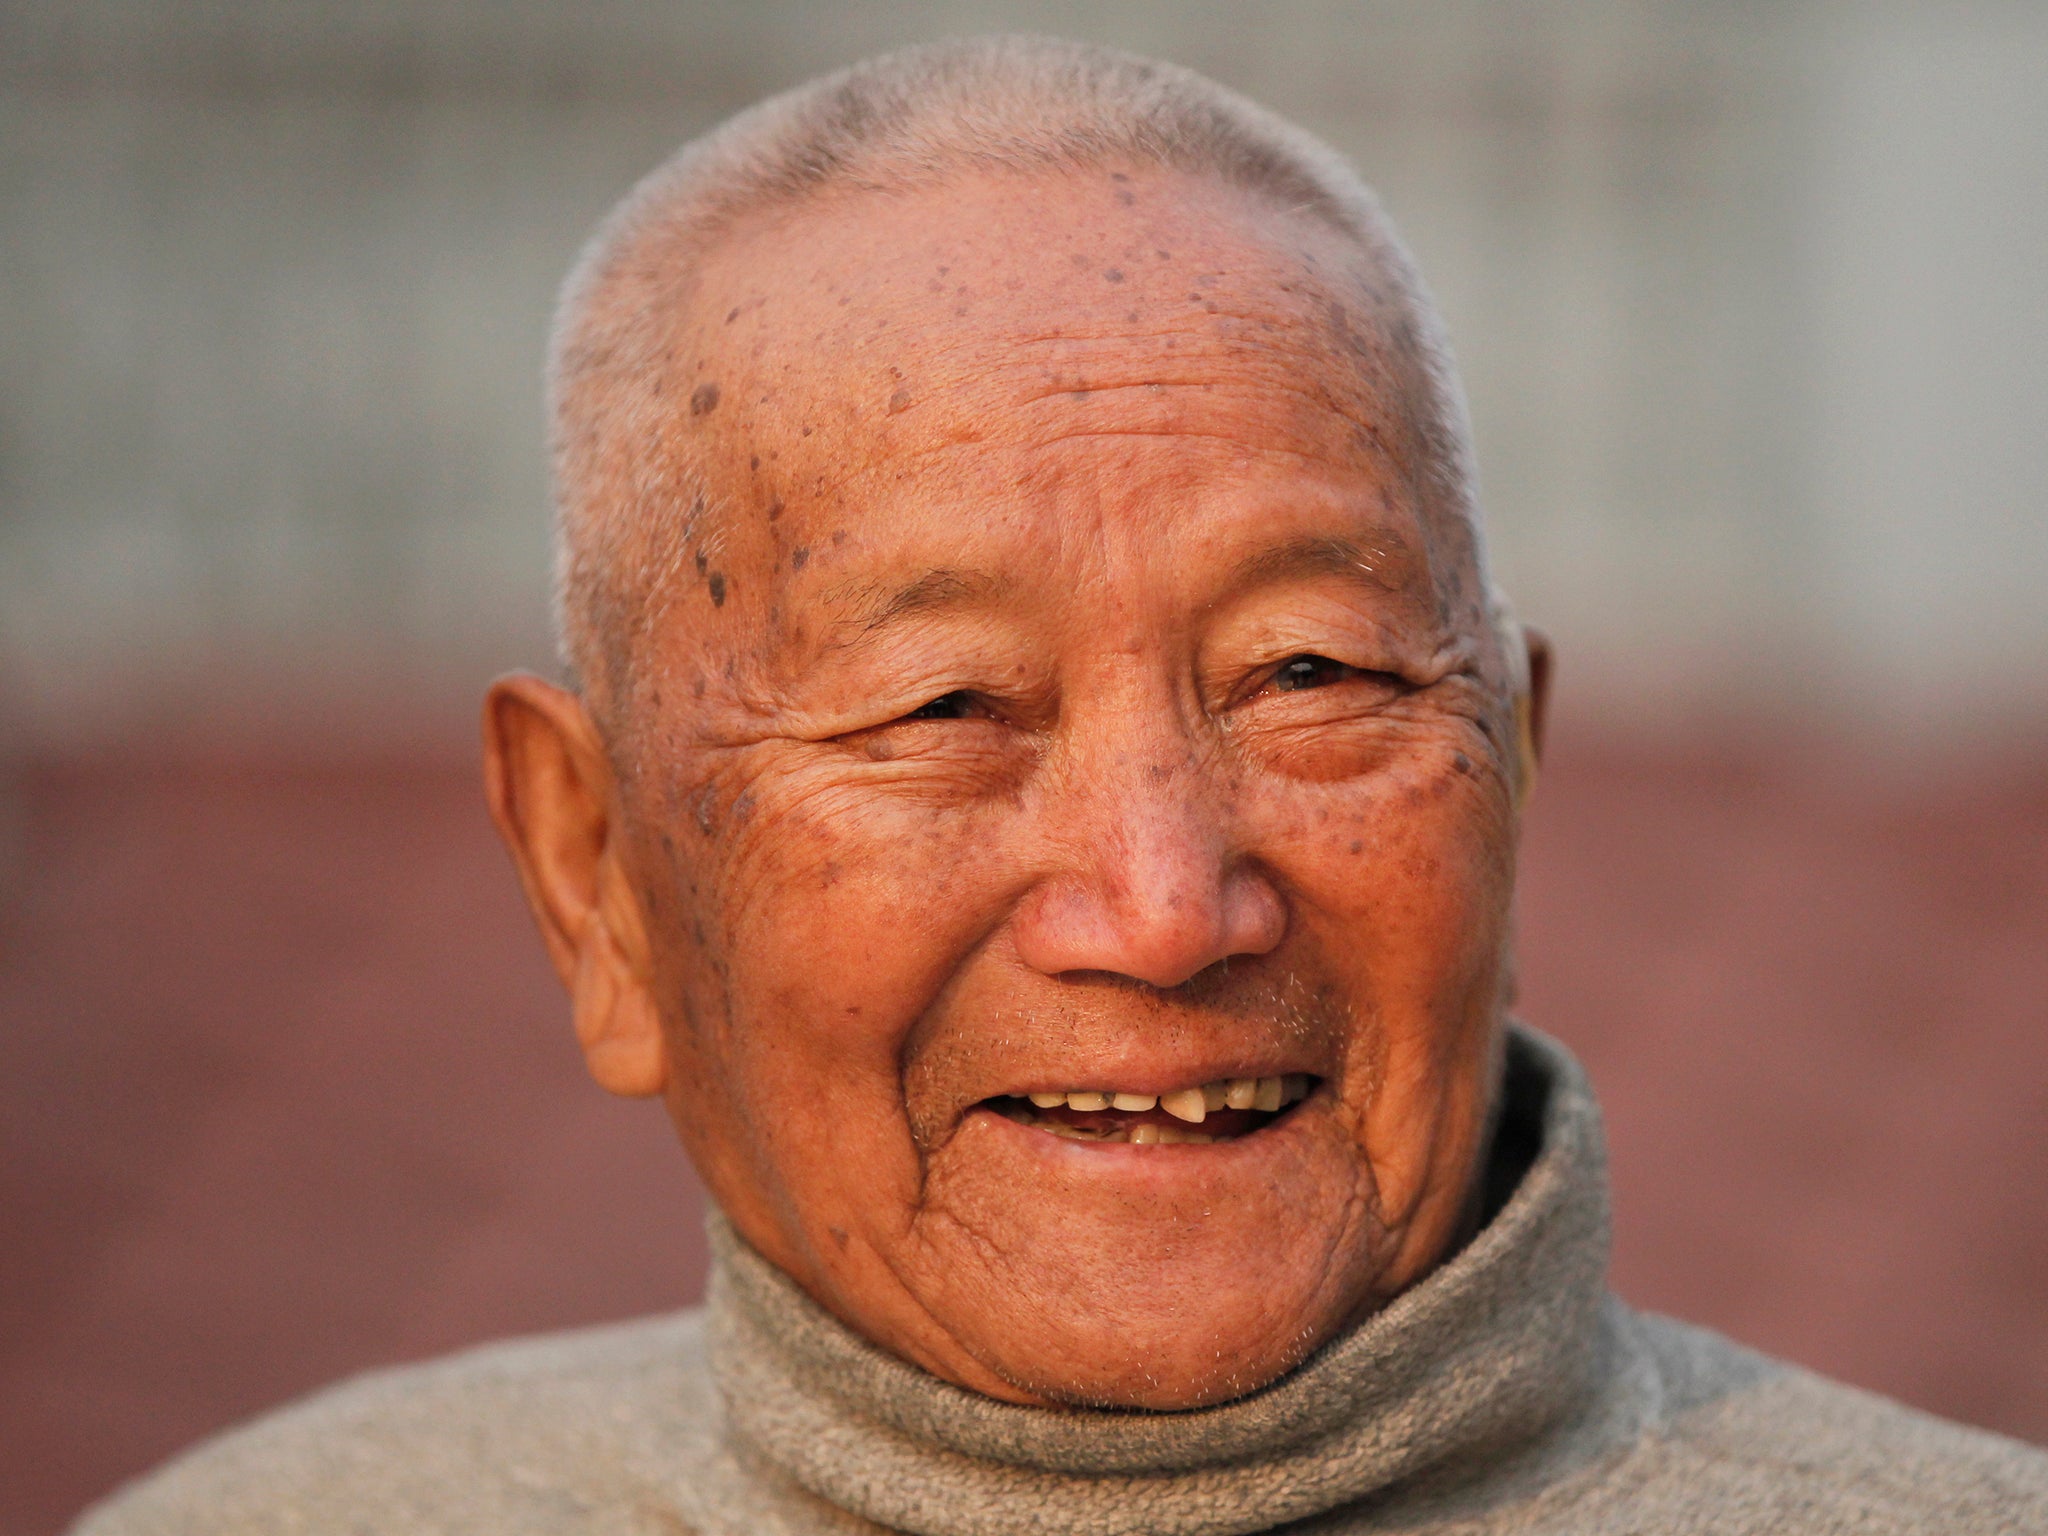 Nepalese mountain climber Min Bahadur Sherchan, who has died aged 85